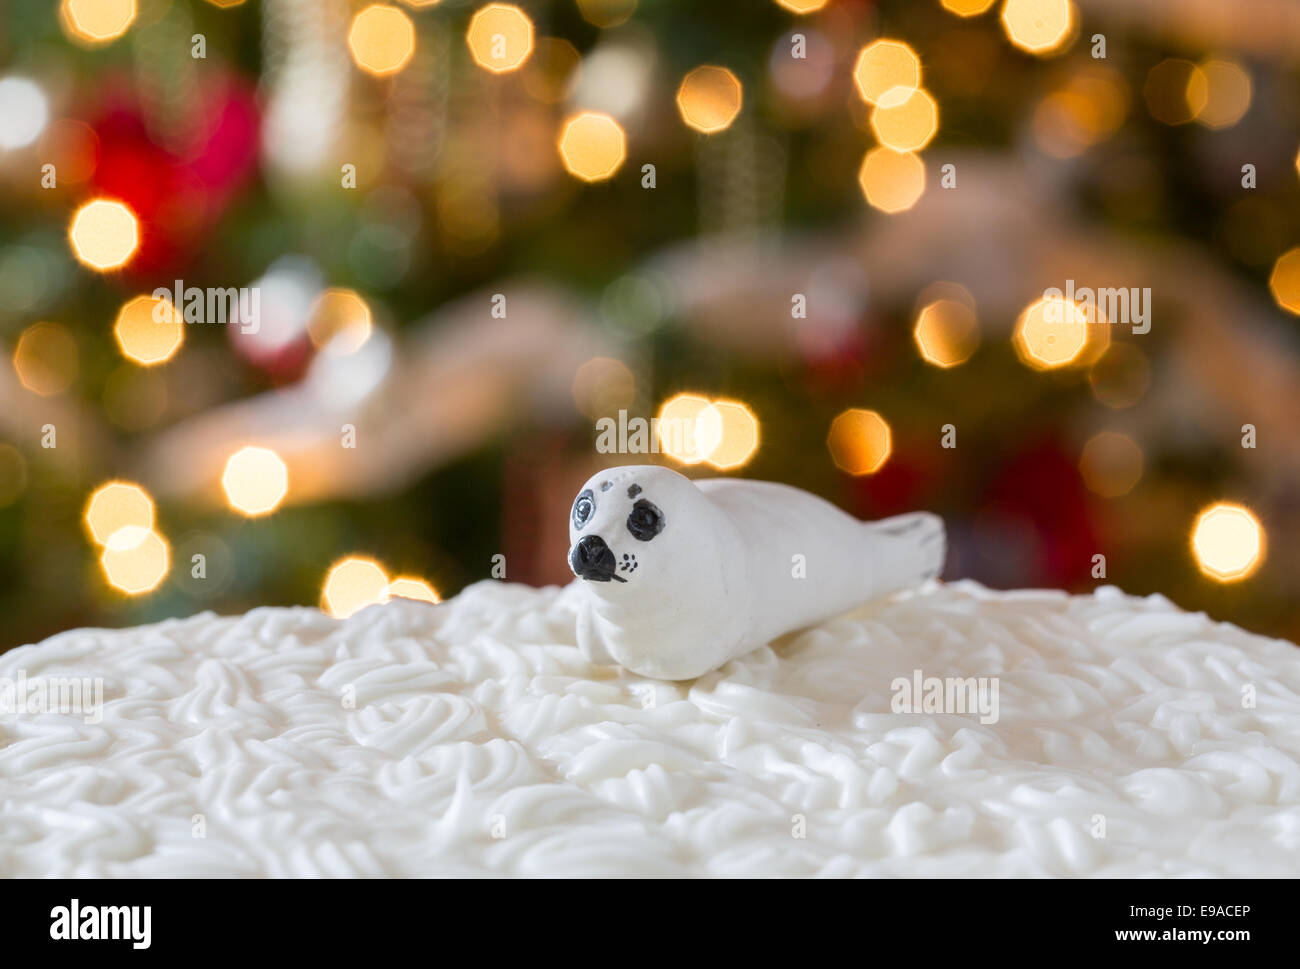 Icing on Christmas cake with tree lights Stock Photo